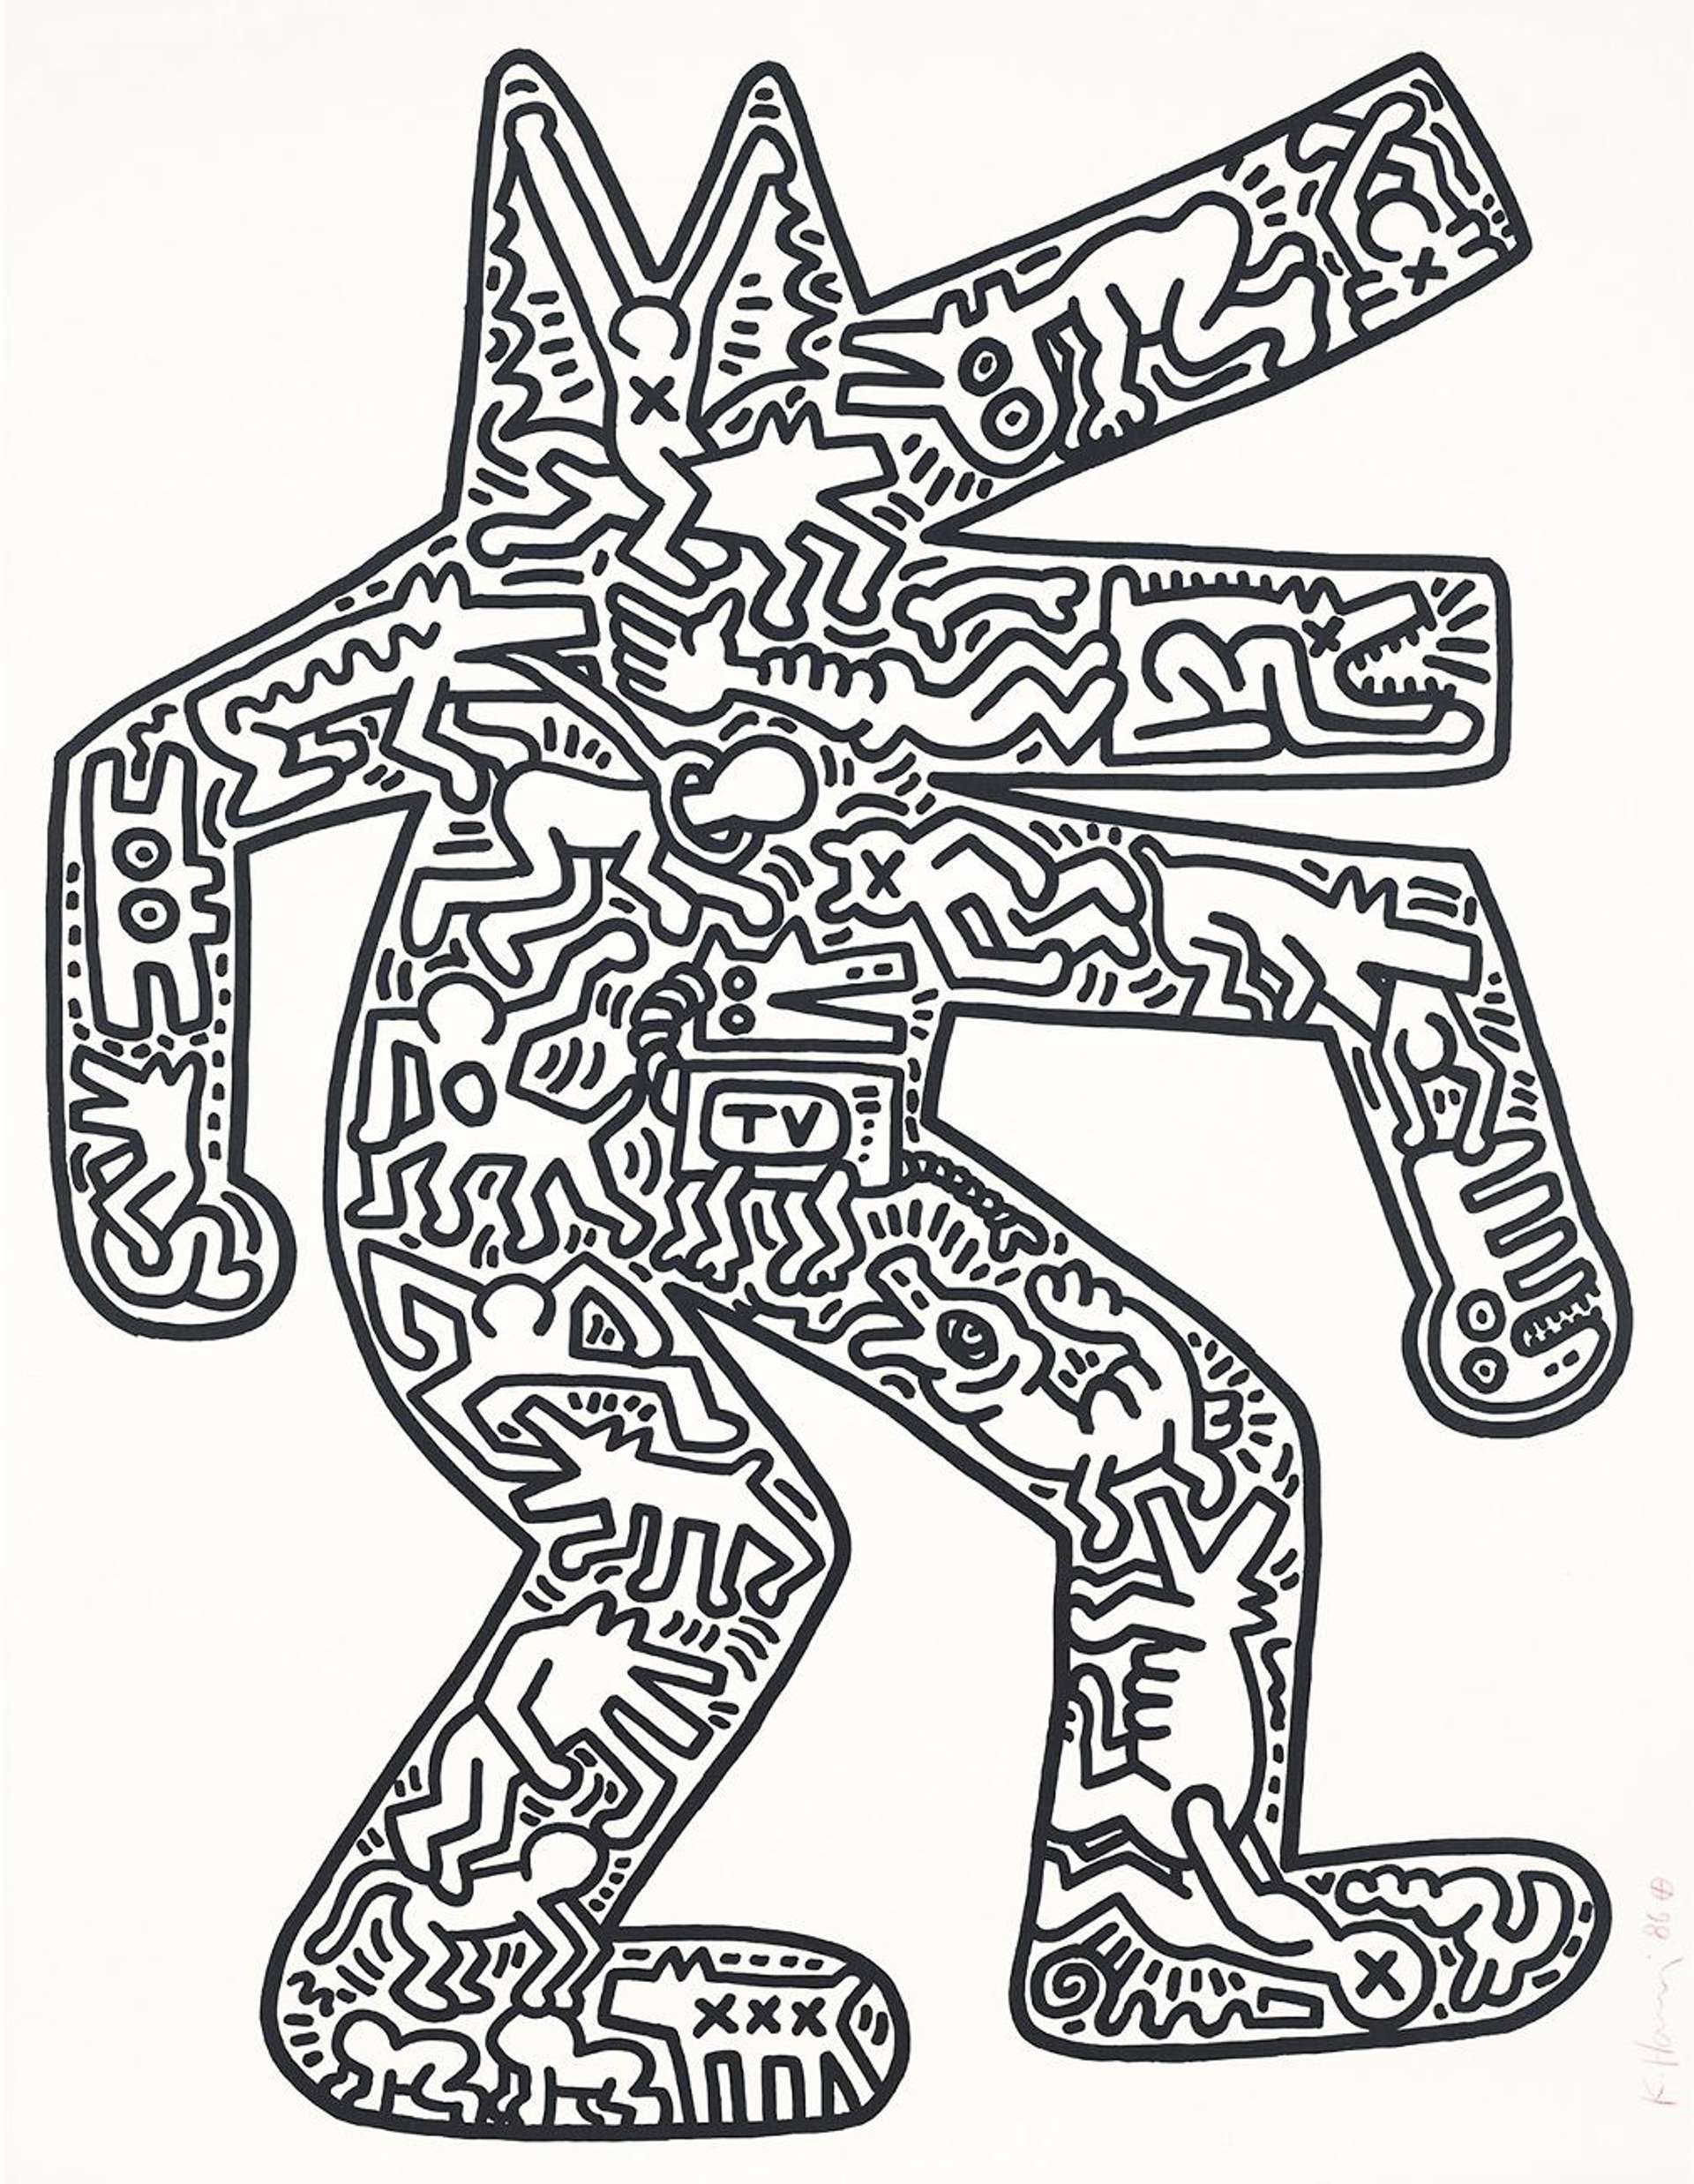 Dog by Keith Haring - MyArtBroker 